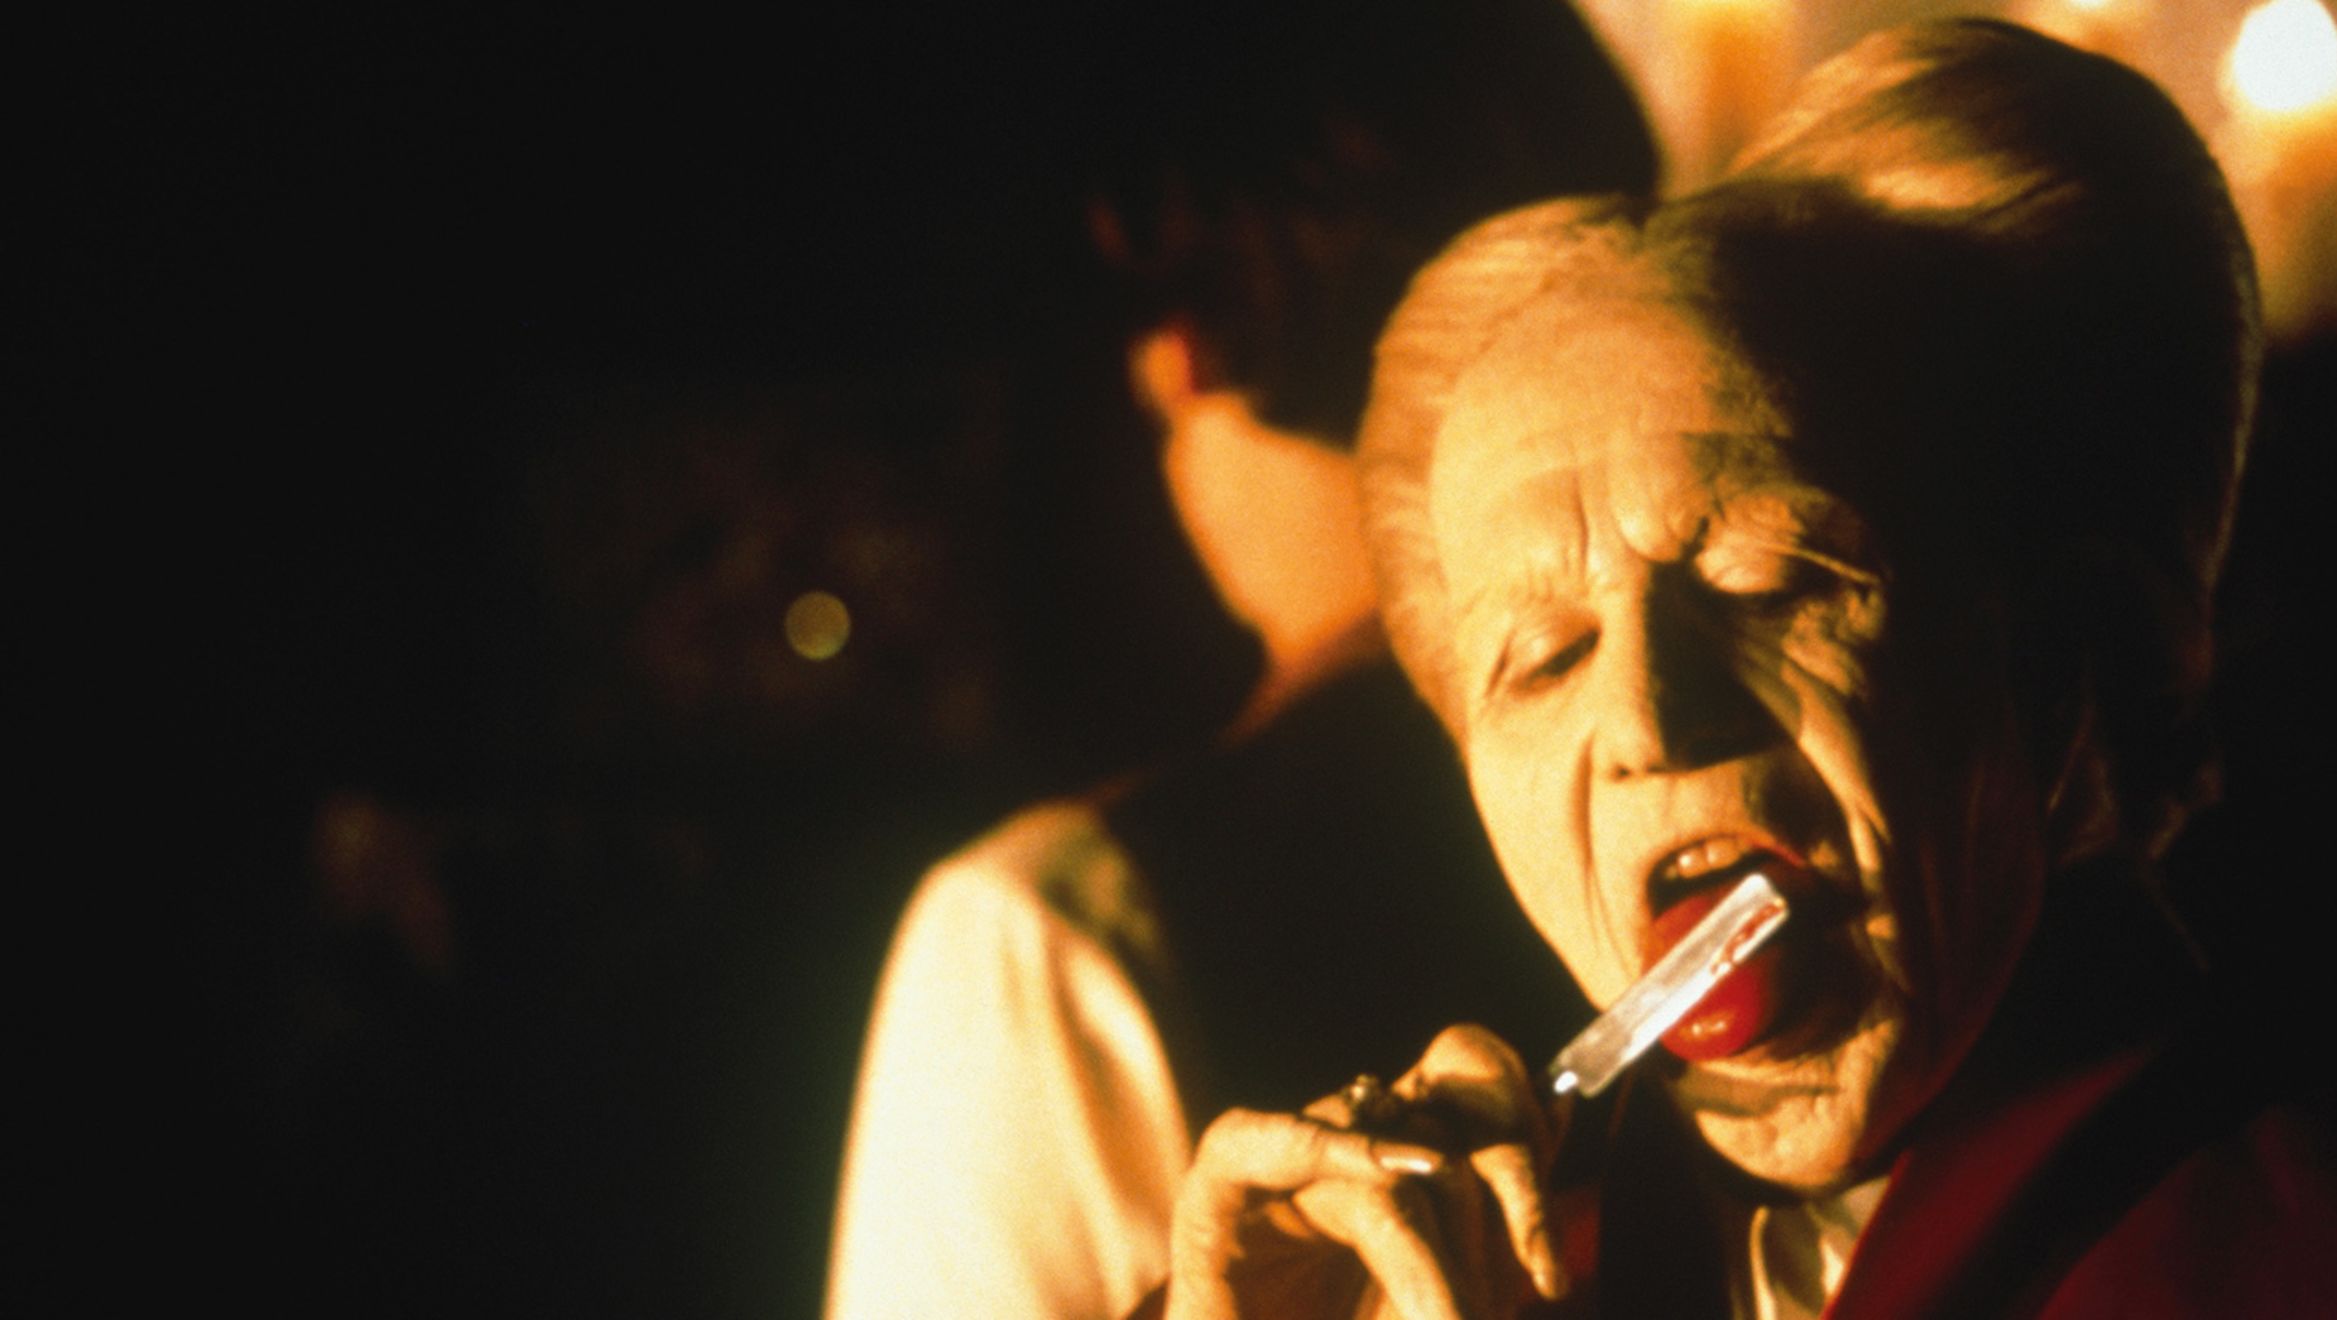 bram stoker's Dracula gary oldman licking razor